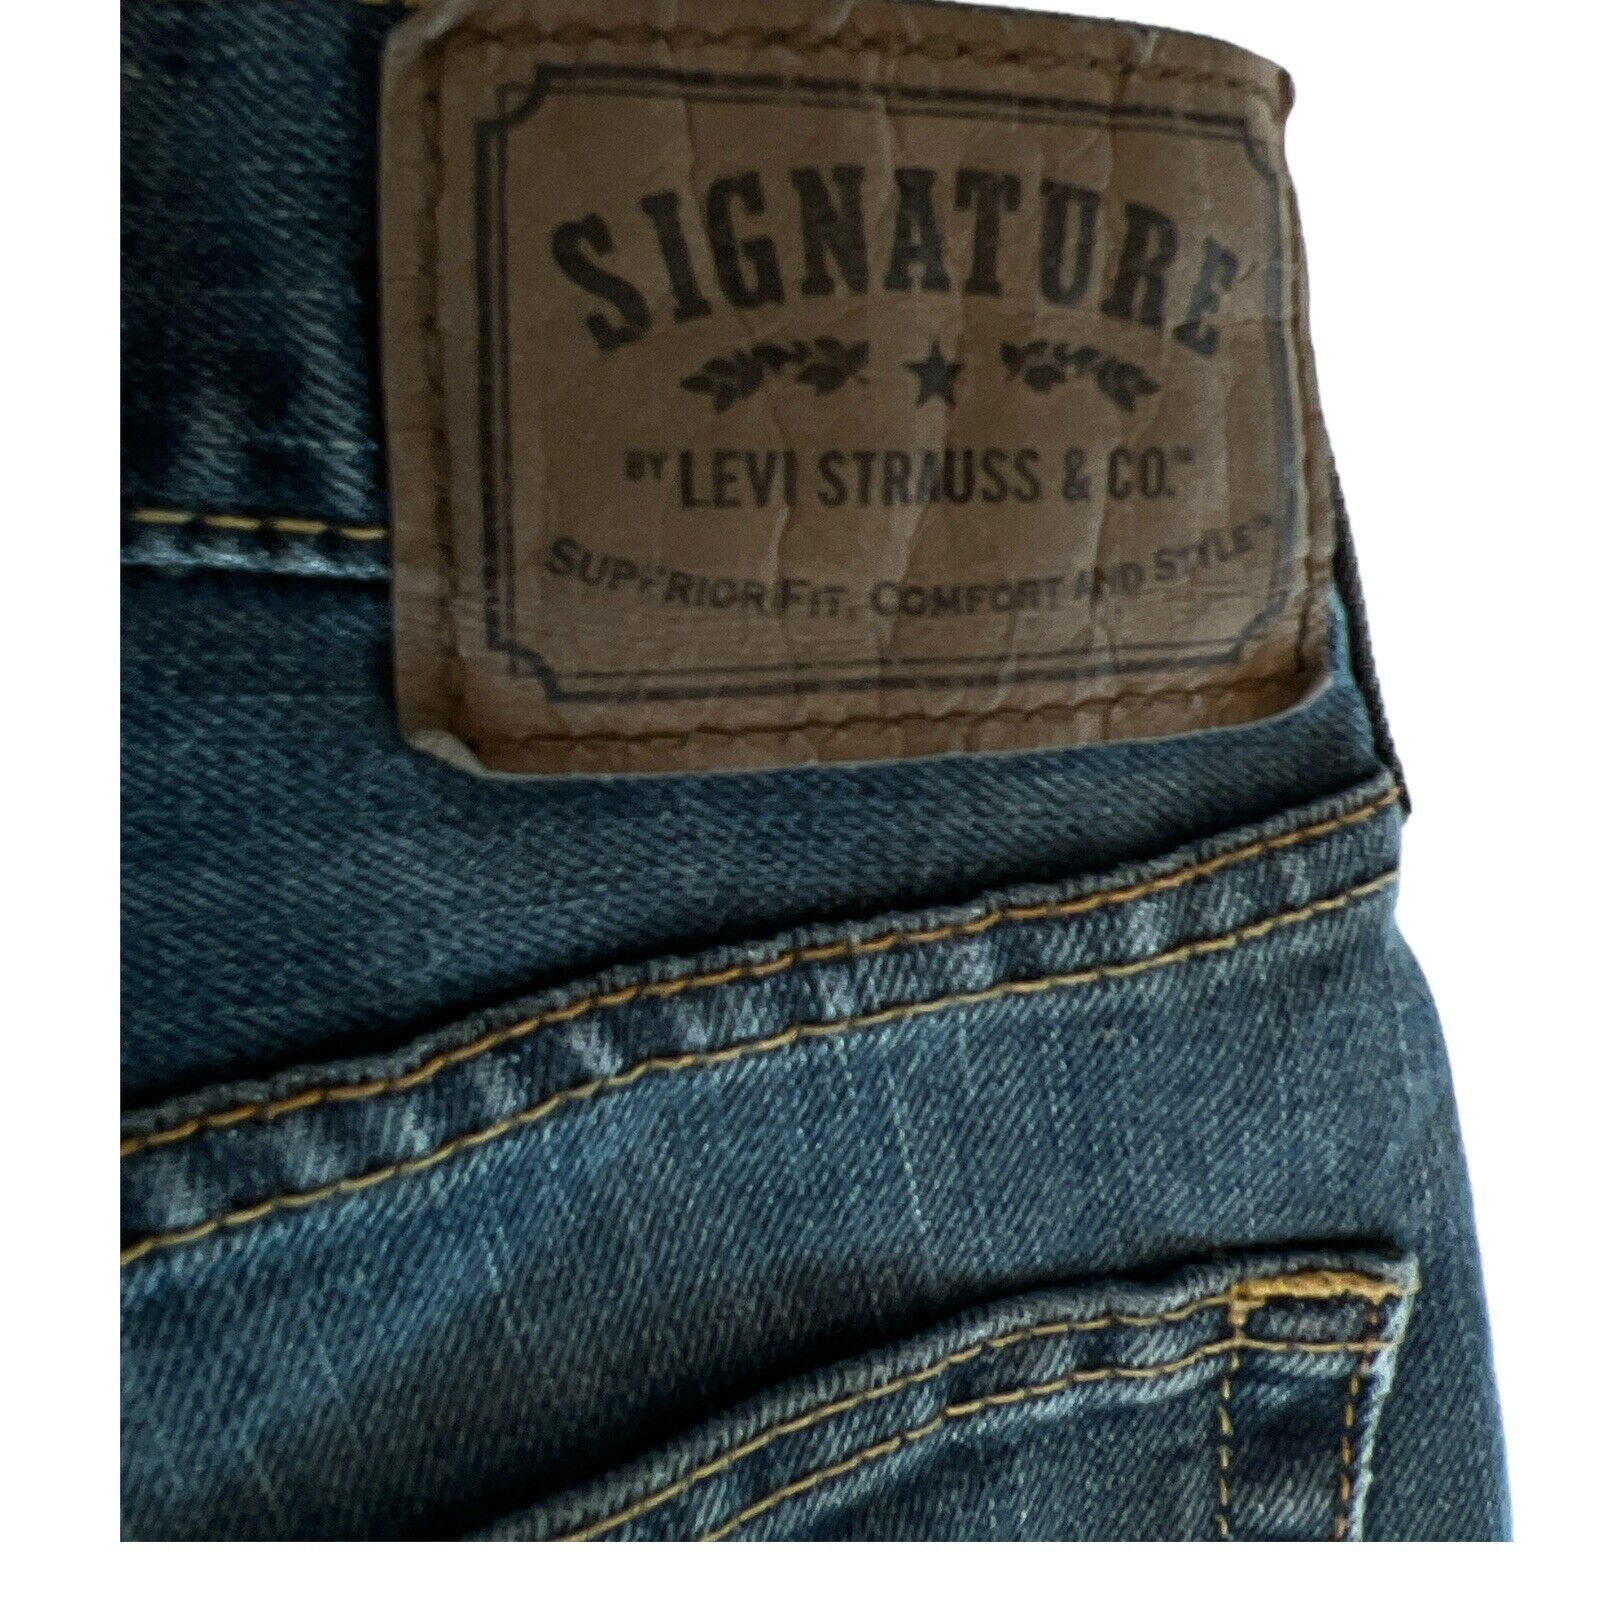 Primary image for Signature Levi Strauss Mens Jeans Slim Straight W34xL30 Dark Wash